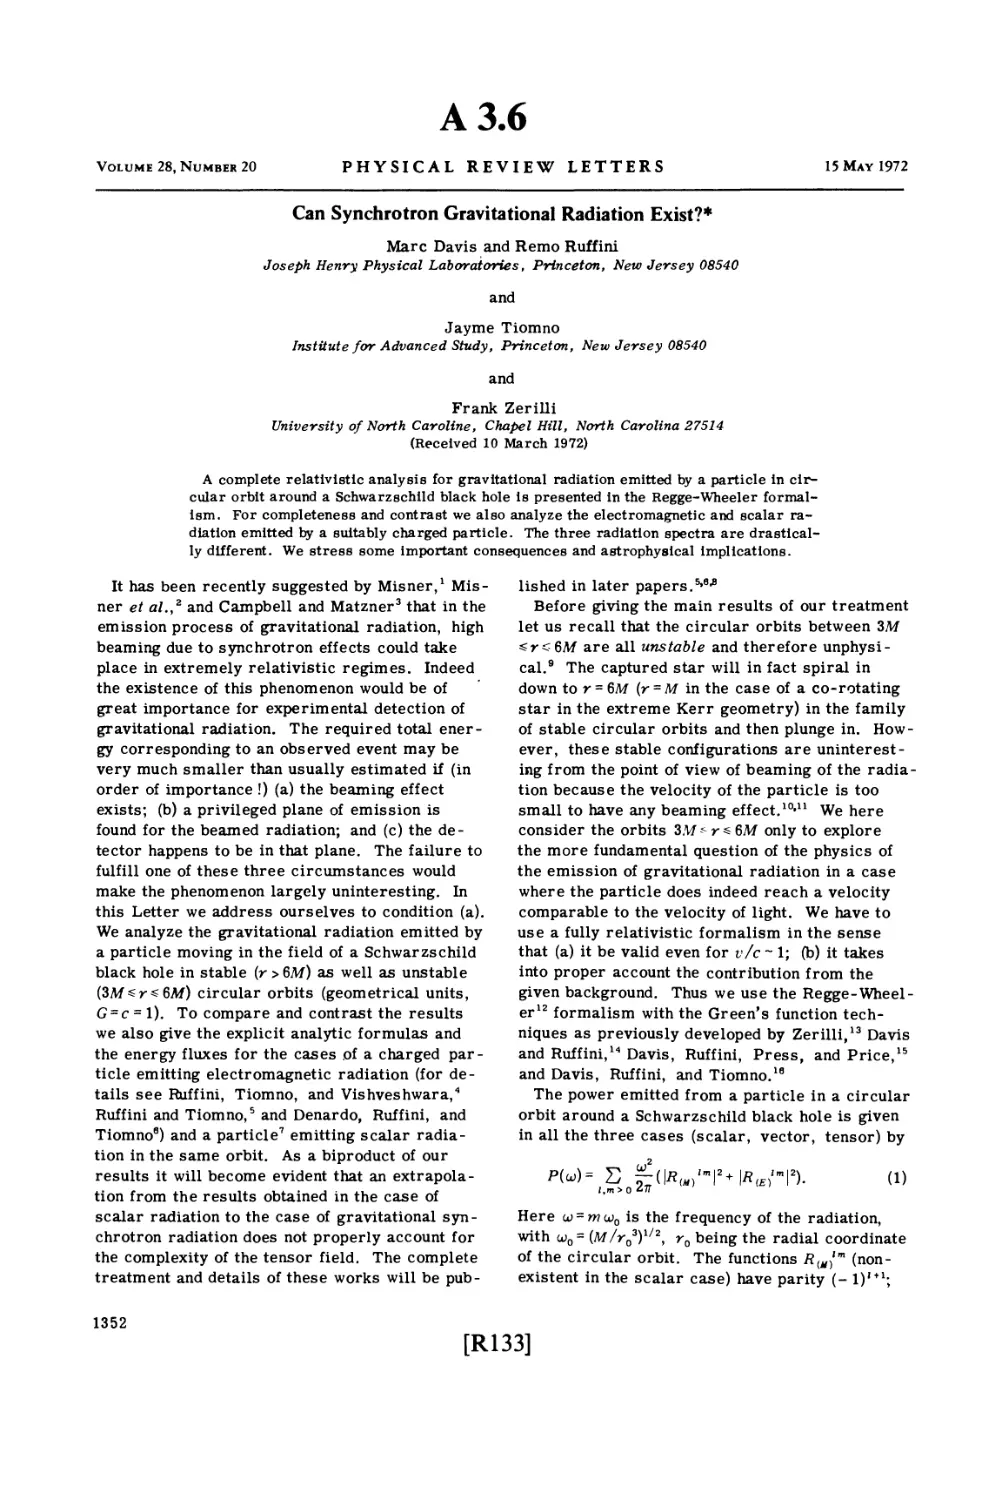 Appendix 3.6 Can Synchrotron Gravitational Radiation Exist? / M. Davis, R. Ruffini, J. Tiomno and F. Zerilli